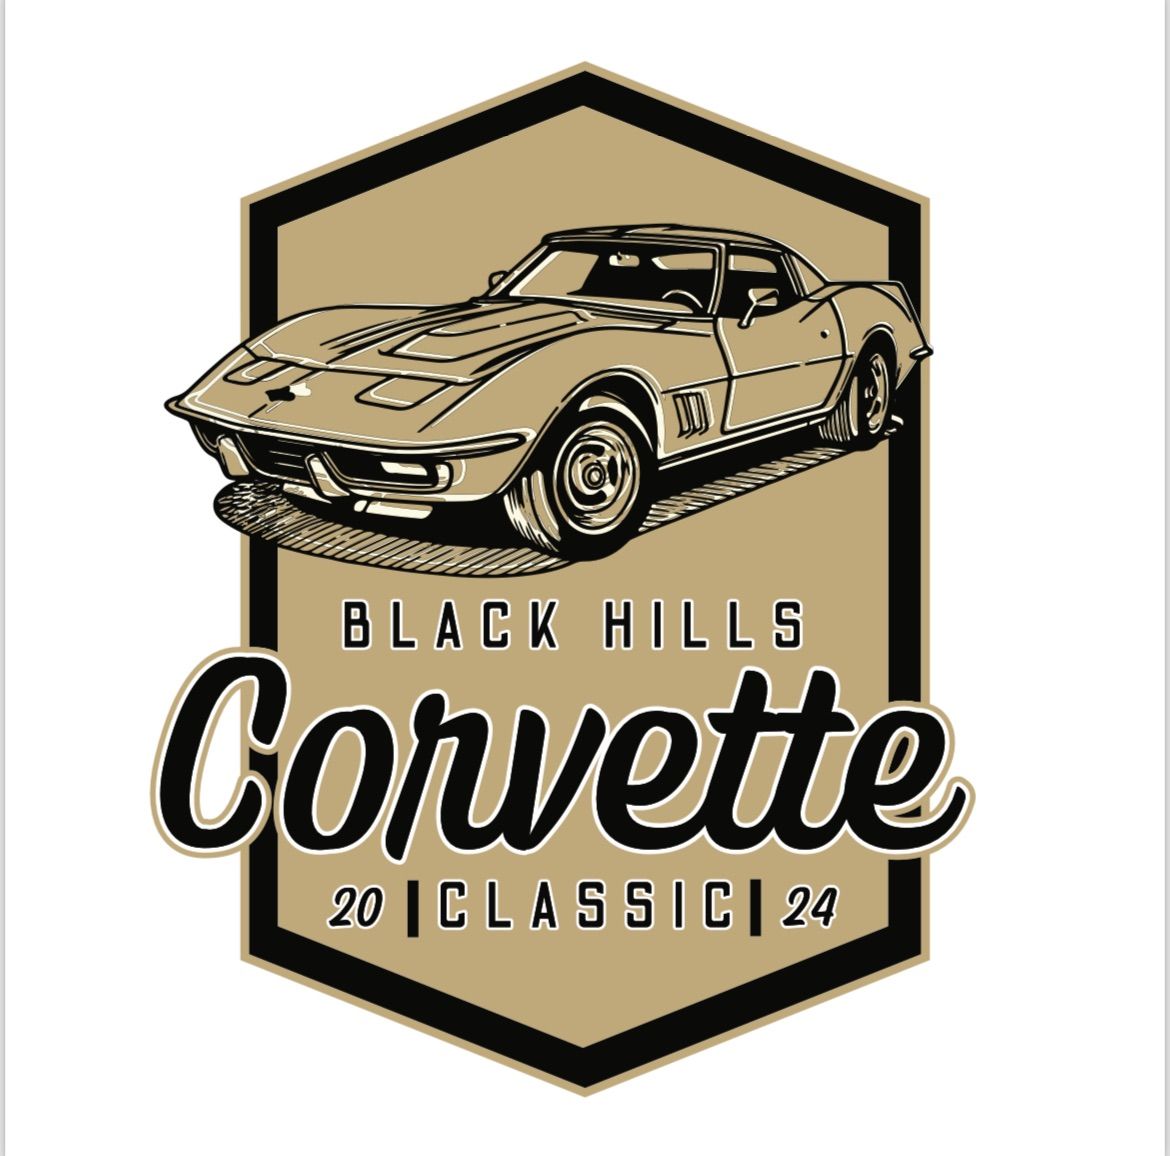 Black Hills Corvette Classic poker run